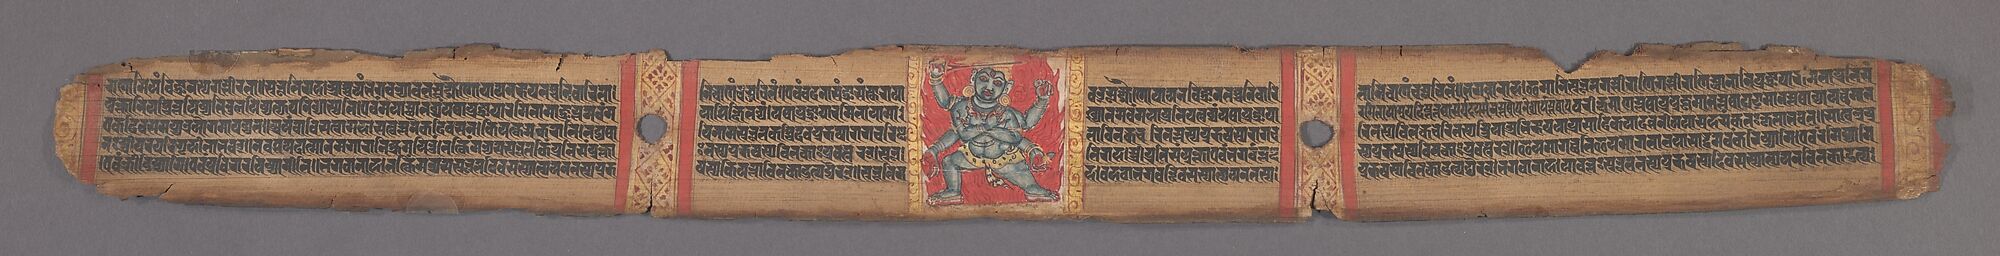 The Wrathful Protector Mahakala in a Six-Armed Form: Folio from a Manuscript of the Ashtasahasrika Prajnaparamita (Perfection of Wisdom)